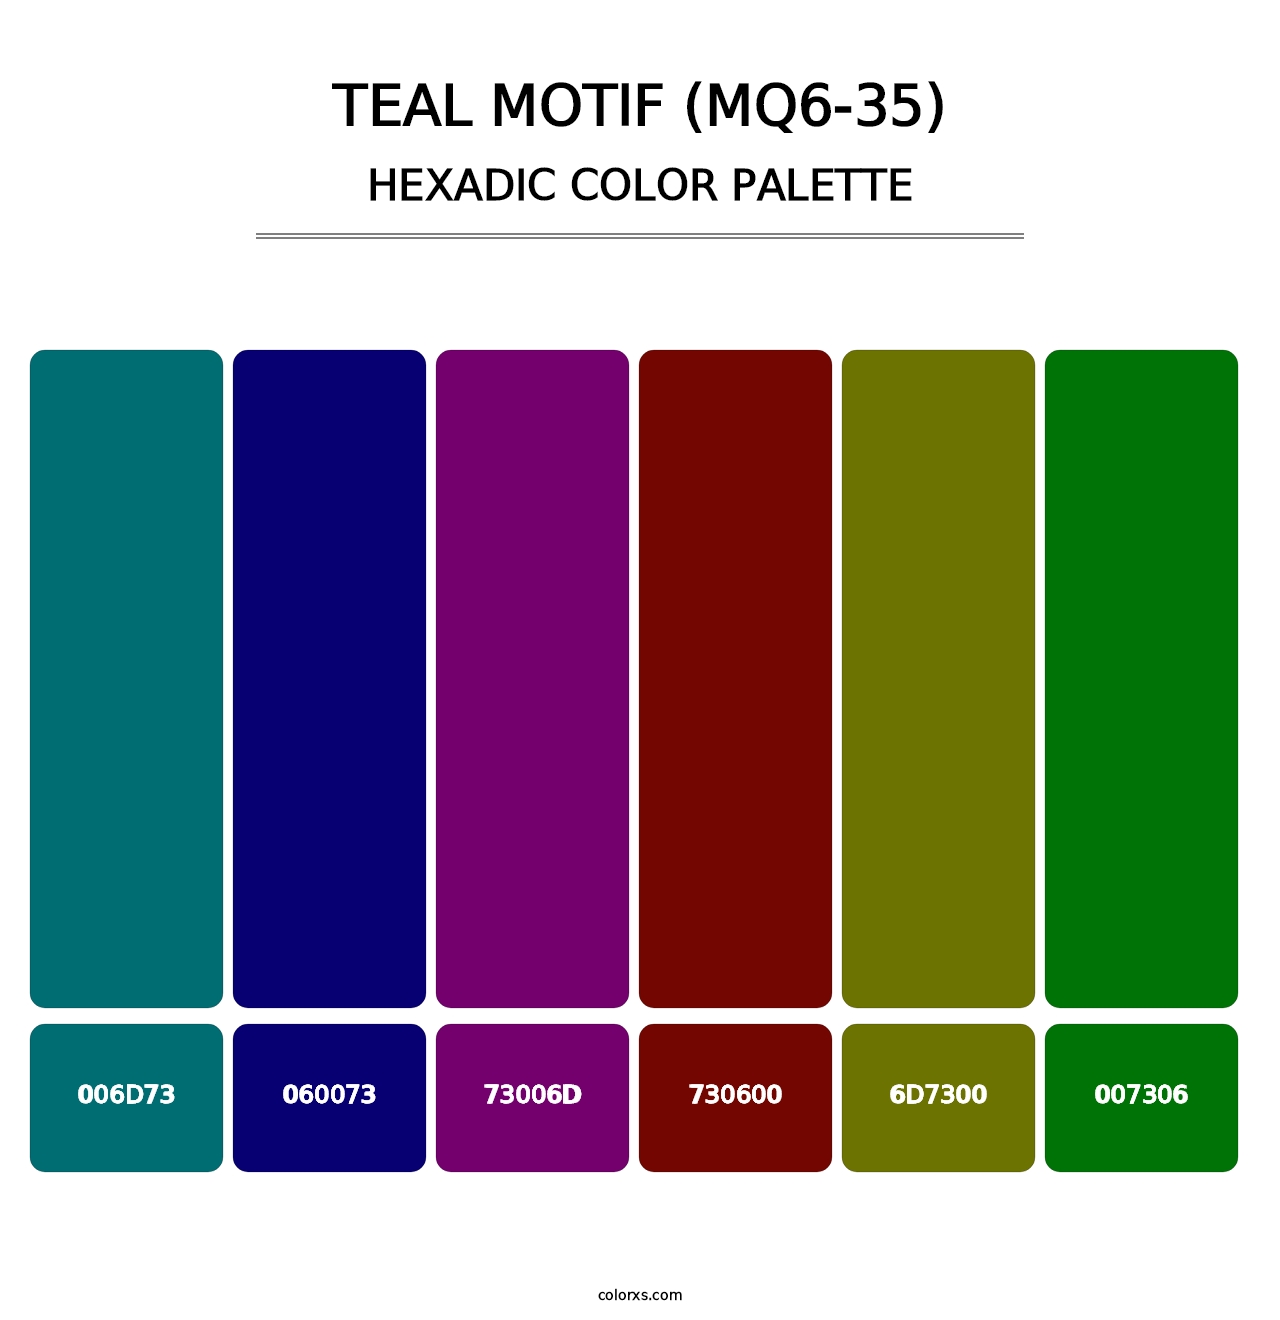 Teal Motif (MQ6-35) - Hexadic Color Palette